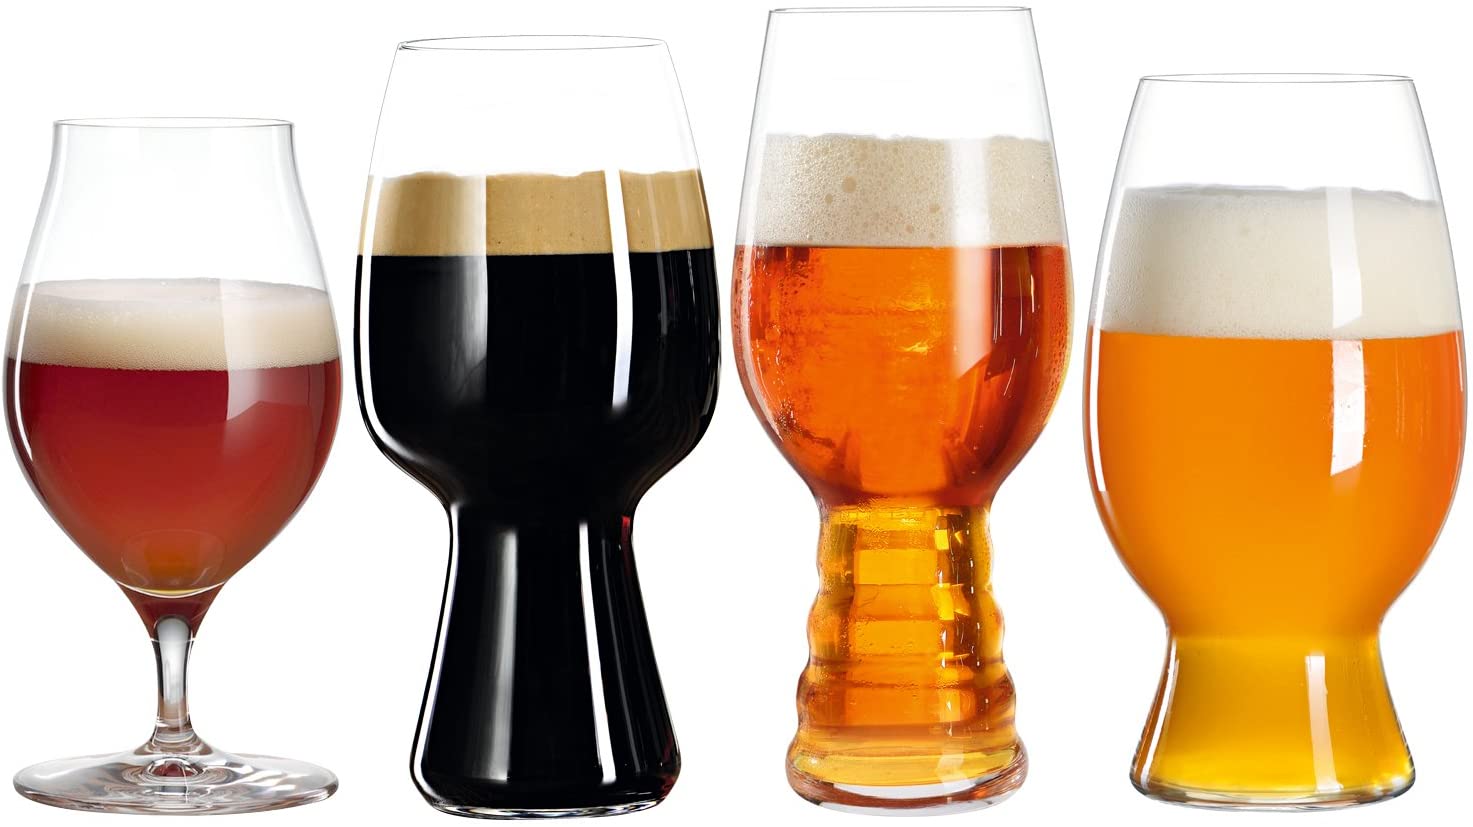 Spiegelau & Nachtmann, 4 Piece Beer Tasting Glass Set, IPA/Stout/Witbeer/Barrel Aged Beer, Crystal Glass, Craft Beer Glasses, 4991697